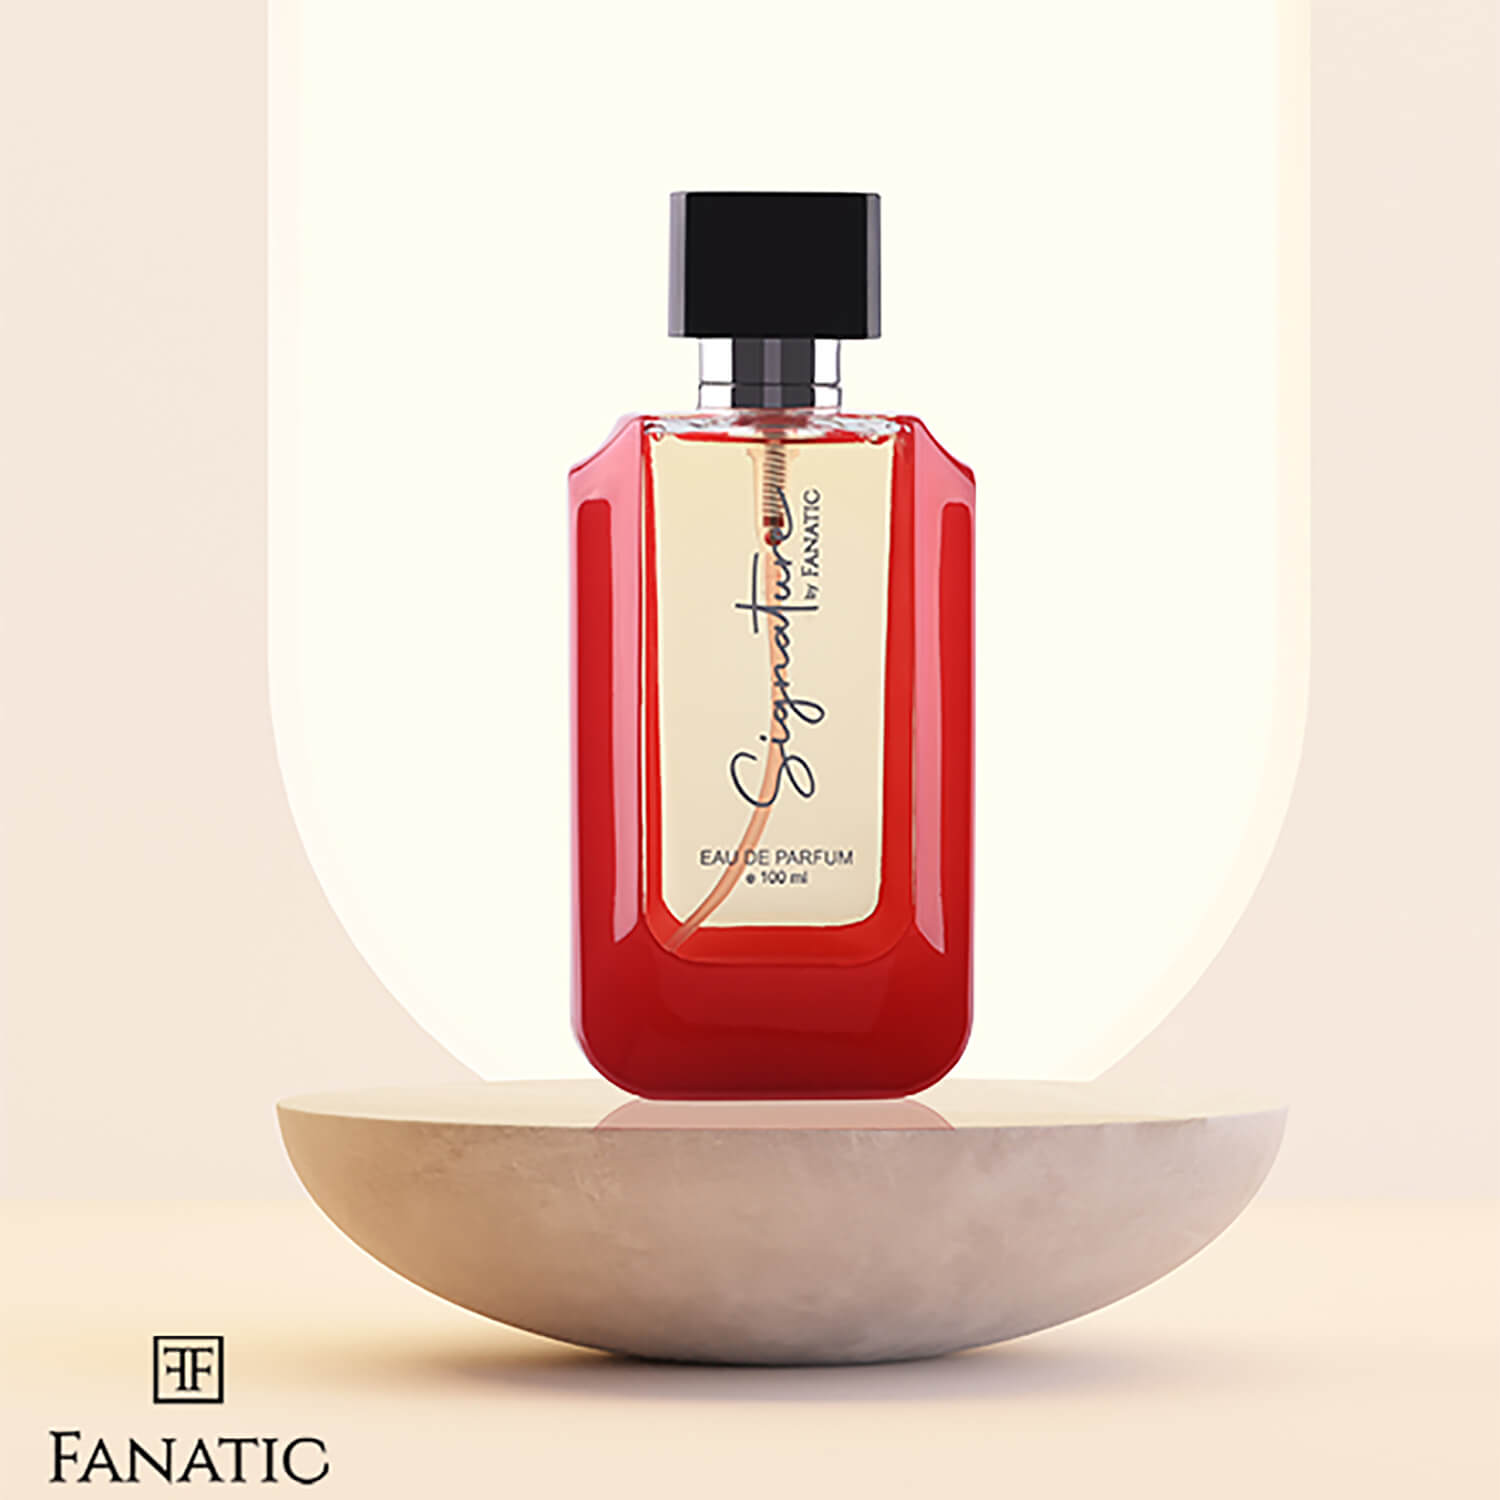 FANATIC SIGNATURE Eau de Parfum - 100 ml